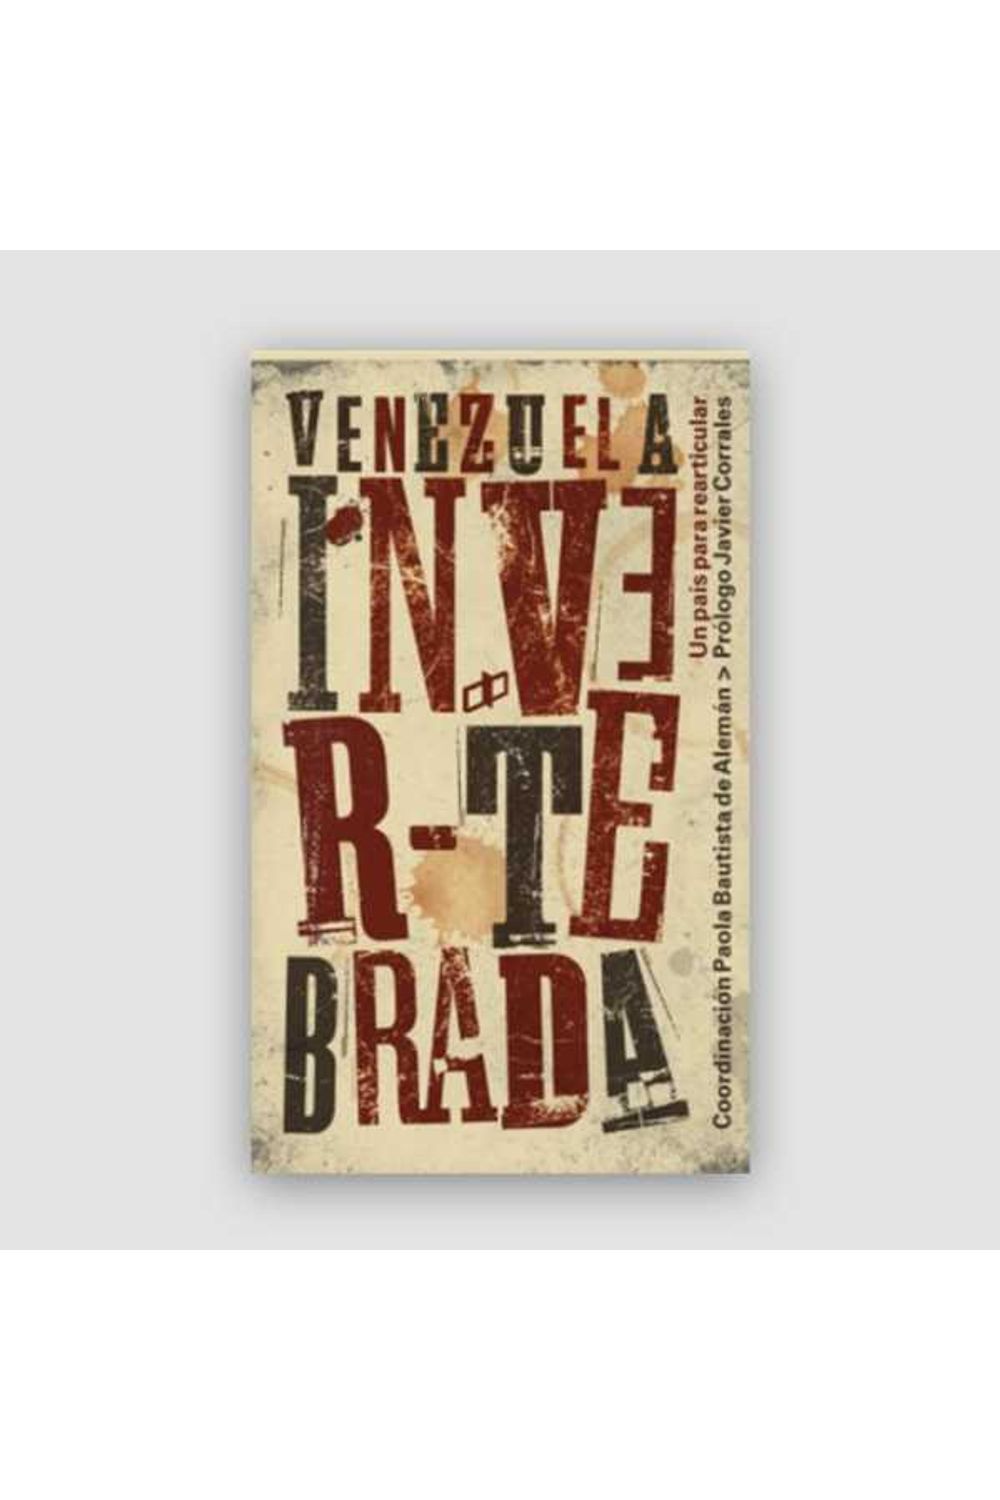 bm-venezuela-invertebrada-cyngular-asesoria-357-ca-editorial-dahbar-9789804250699